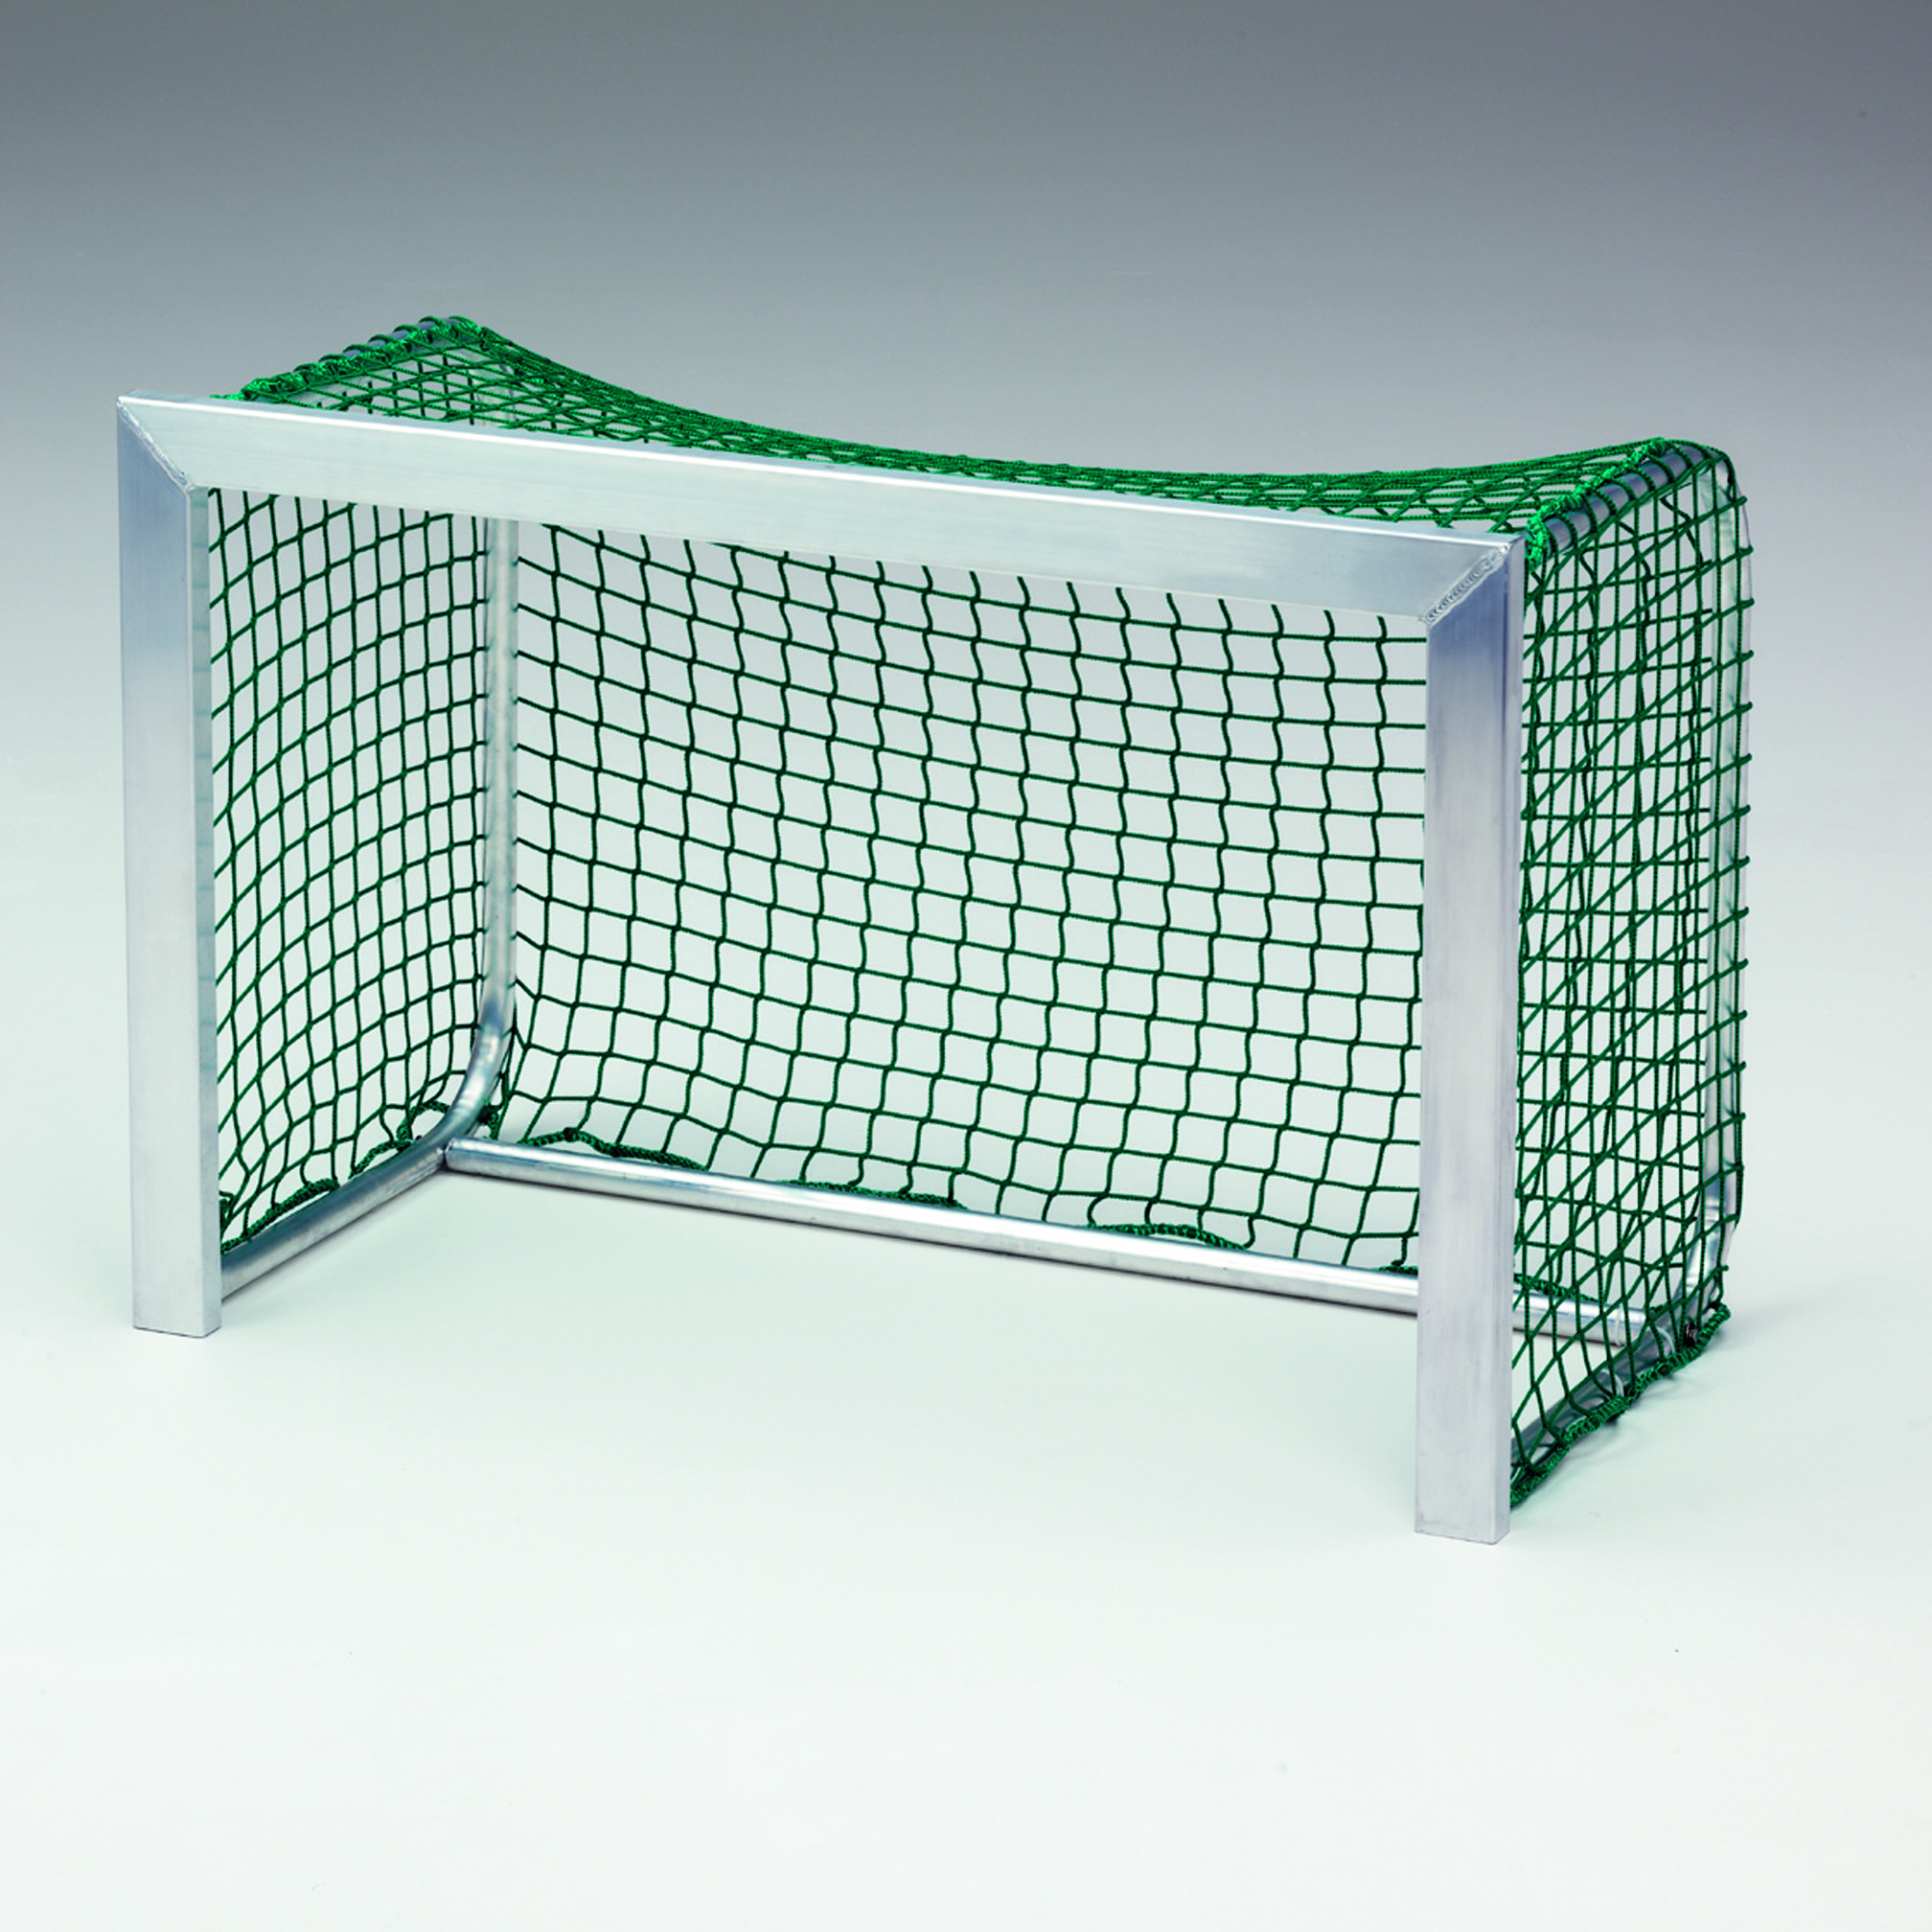 Mini goal 120x80 cm alu, including net